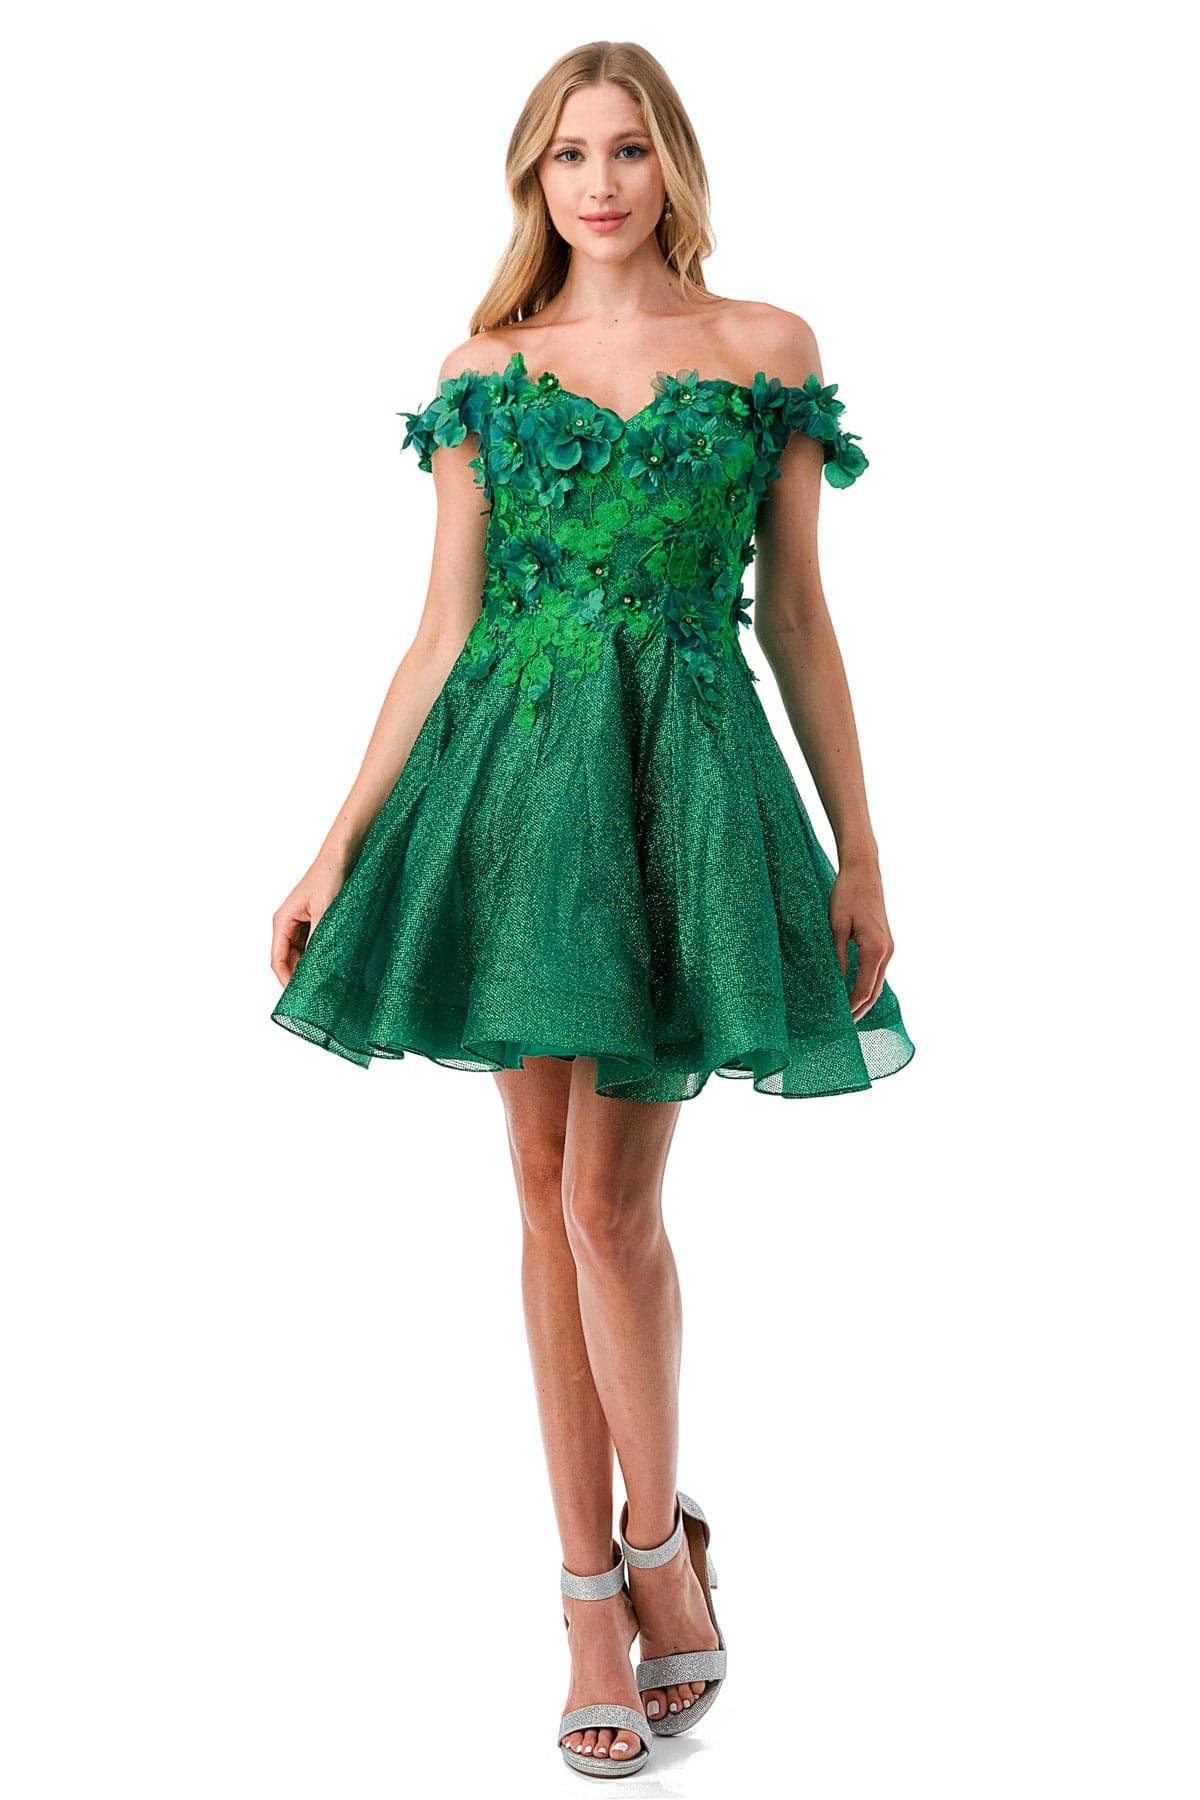 Aspeed S2721 Hunter Green Off Shoulder Short Dress | 4 Colors - NORMA REED